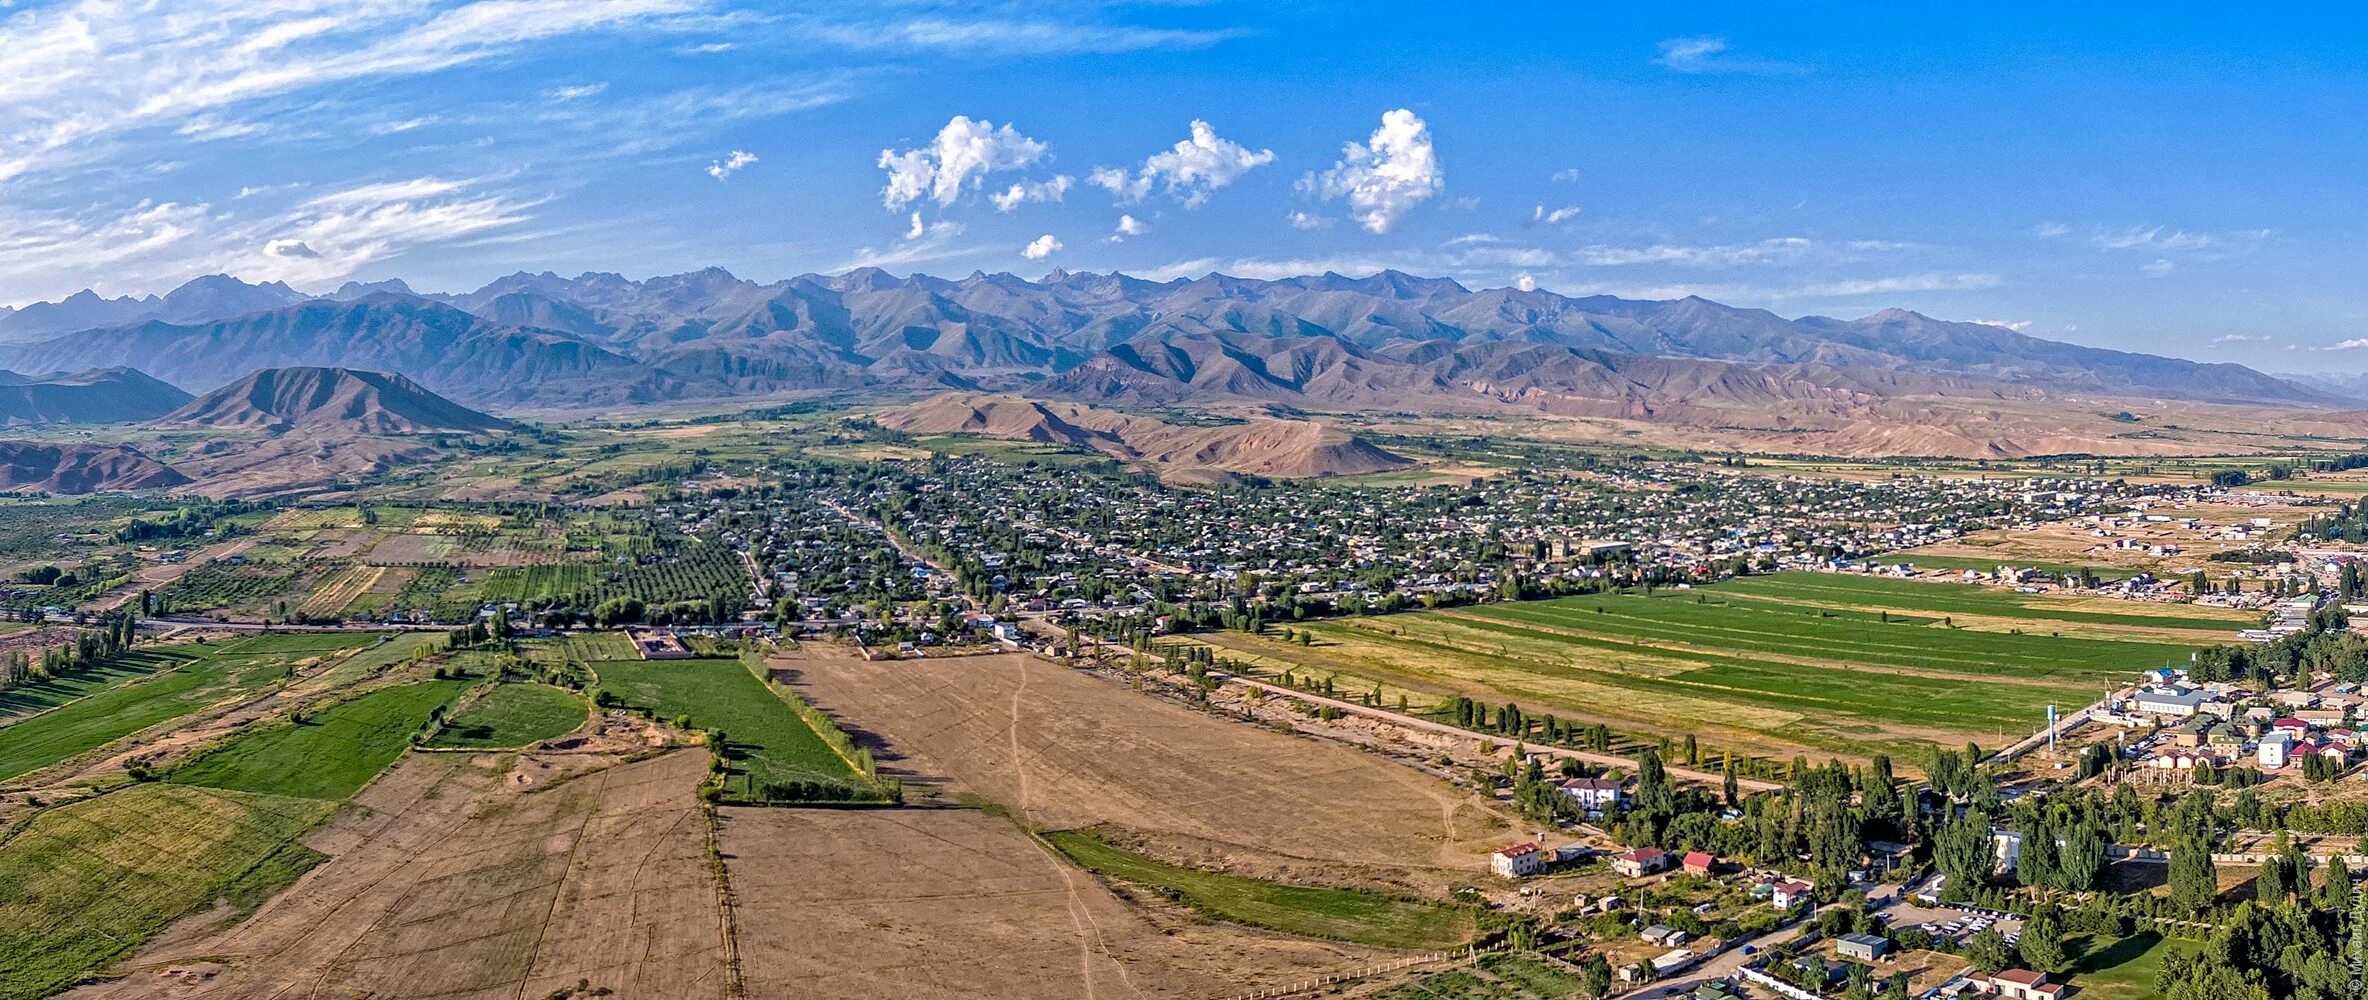 Поселки киргизии. Село Бостери. Село Бостери Иссык-Куль. Аул в Киргизии. Киргизия село Бостери.